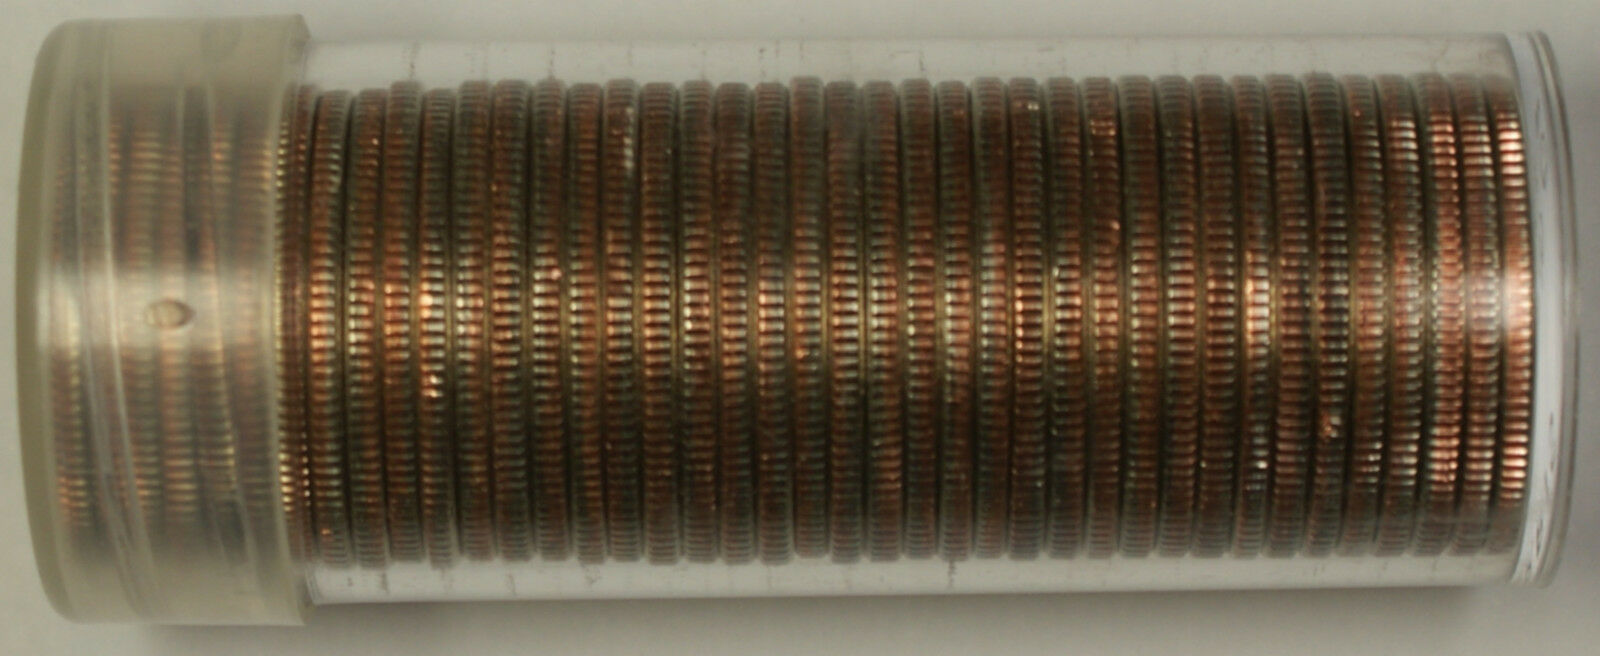 2003 D Maine State Quarter BU Roll- 40 Coins